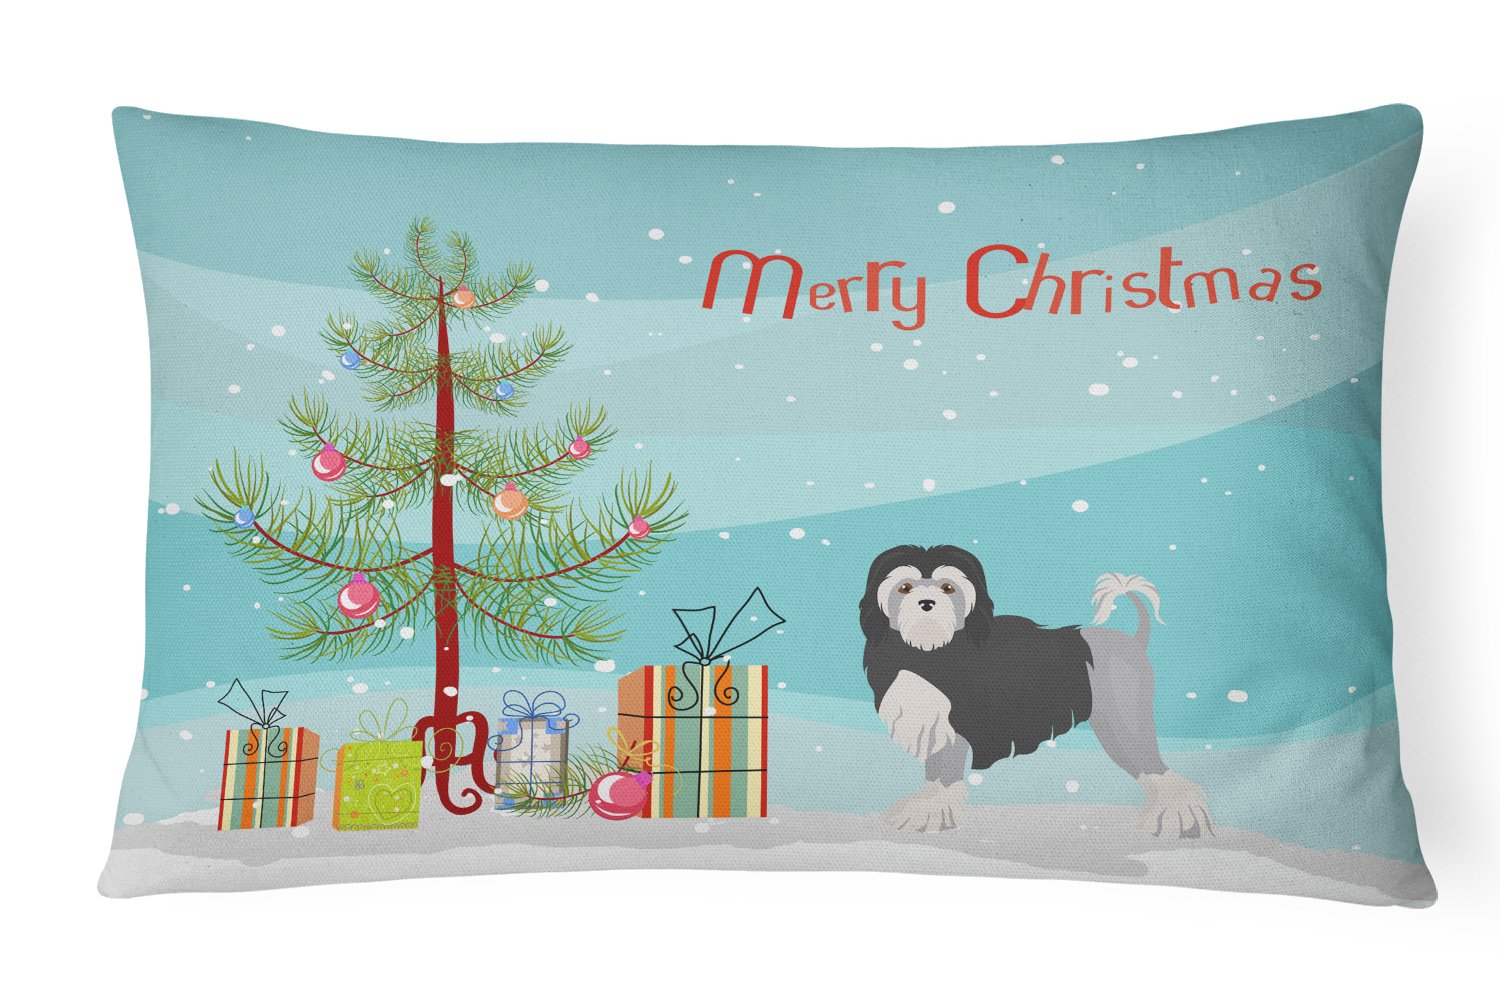 Löwchen or Little Lion Dog Christmas Tree Canvas Fabric Decorative Pillow CK3470PW1216 by Caroline's Treasures